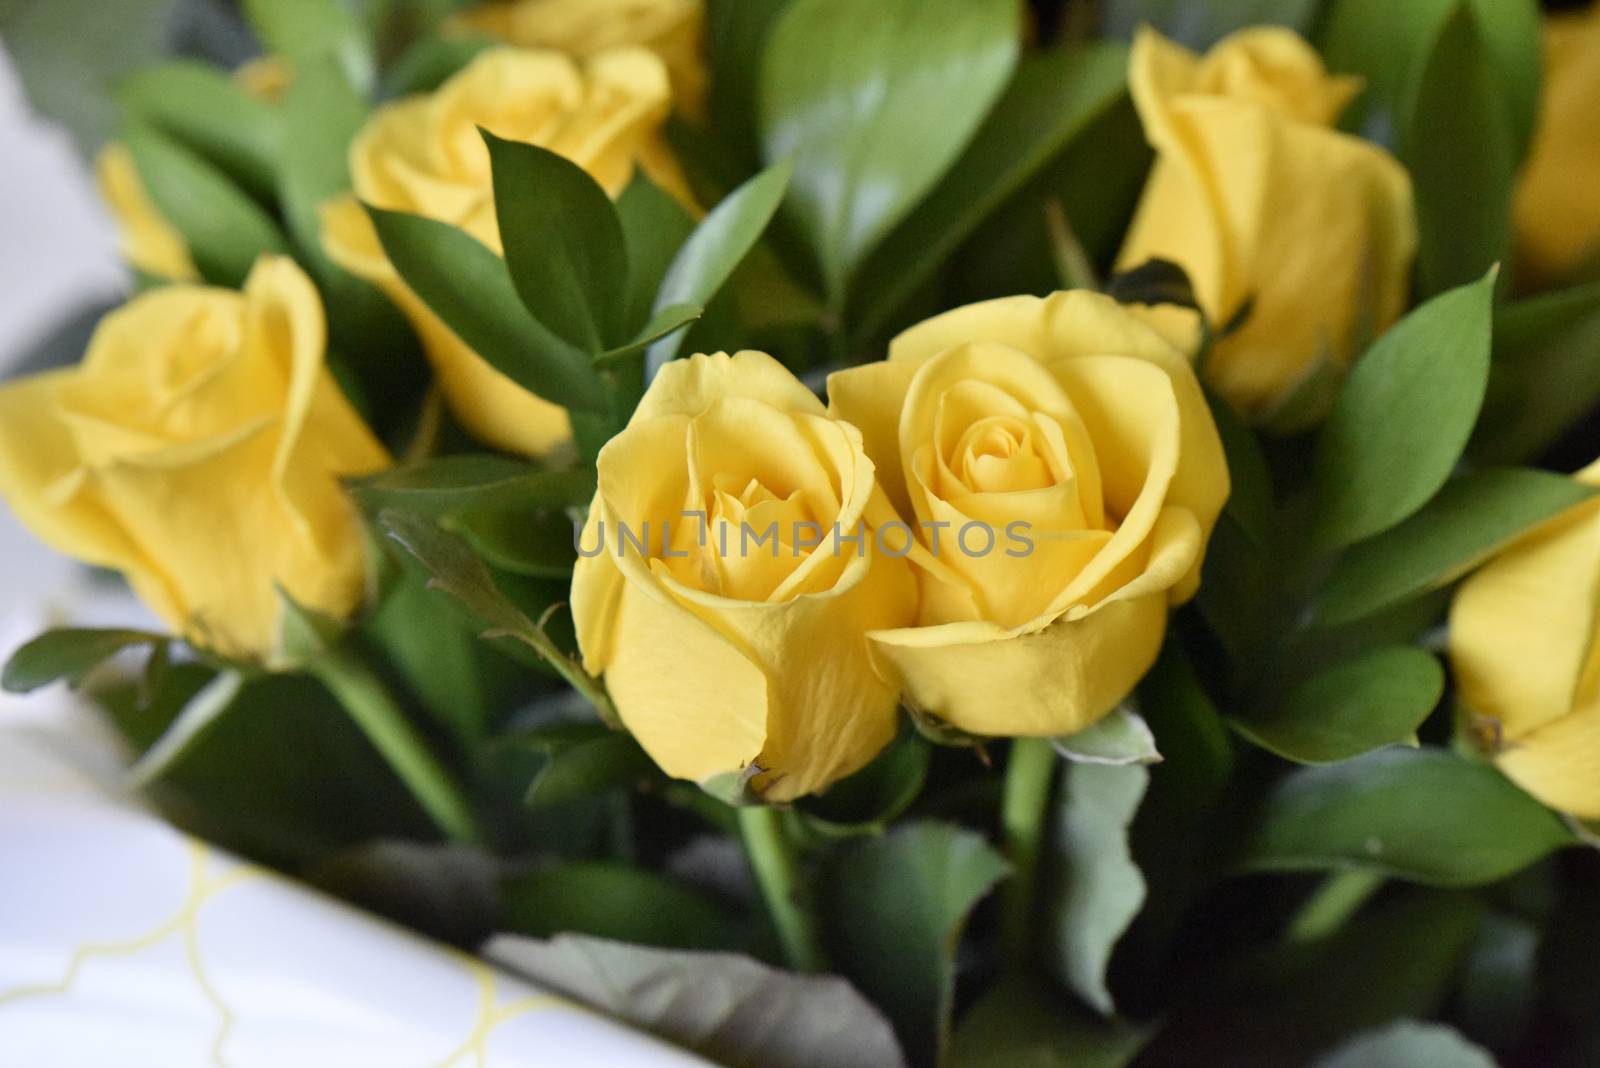 Bouquet of yellow roses, studio shot. Selective focus. Romance concept.